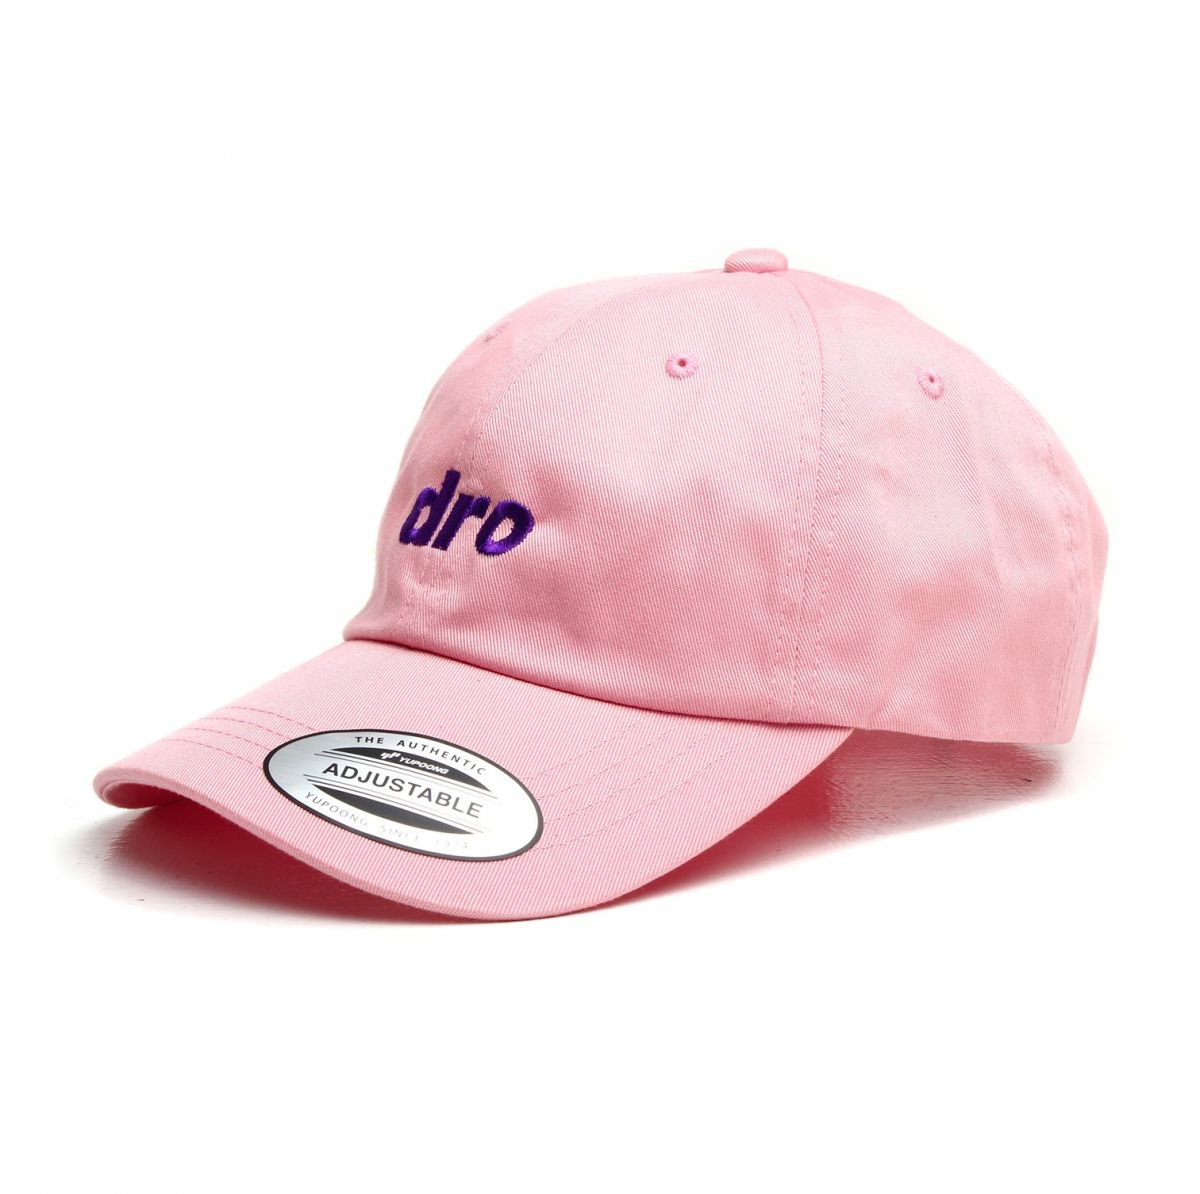 DRO Pink Dad Hat Purple Logo VS-STAPLE-PINK - Karmaloop